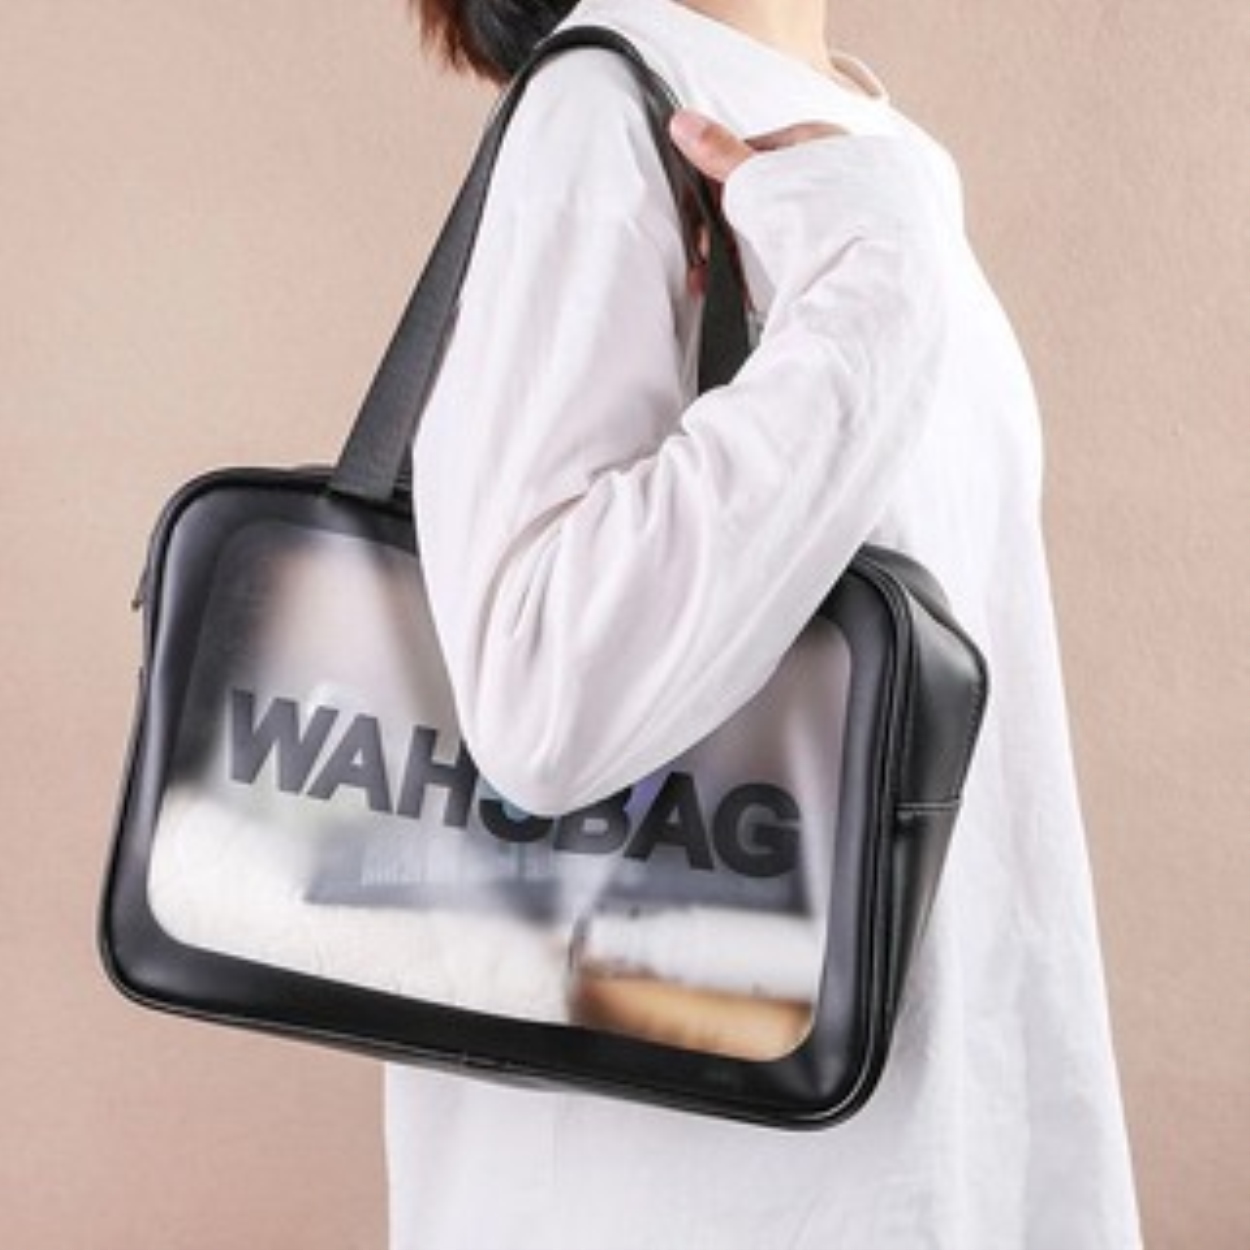 Wash bag ผู้หญิงกระเป๋ากันน้ำแบบพกพาMatteตัวอักษรรูปแบบZipperแต่งหน้ากระเป๋าสำหรับเดินทางธุรกิจท่องเที่ยว